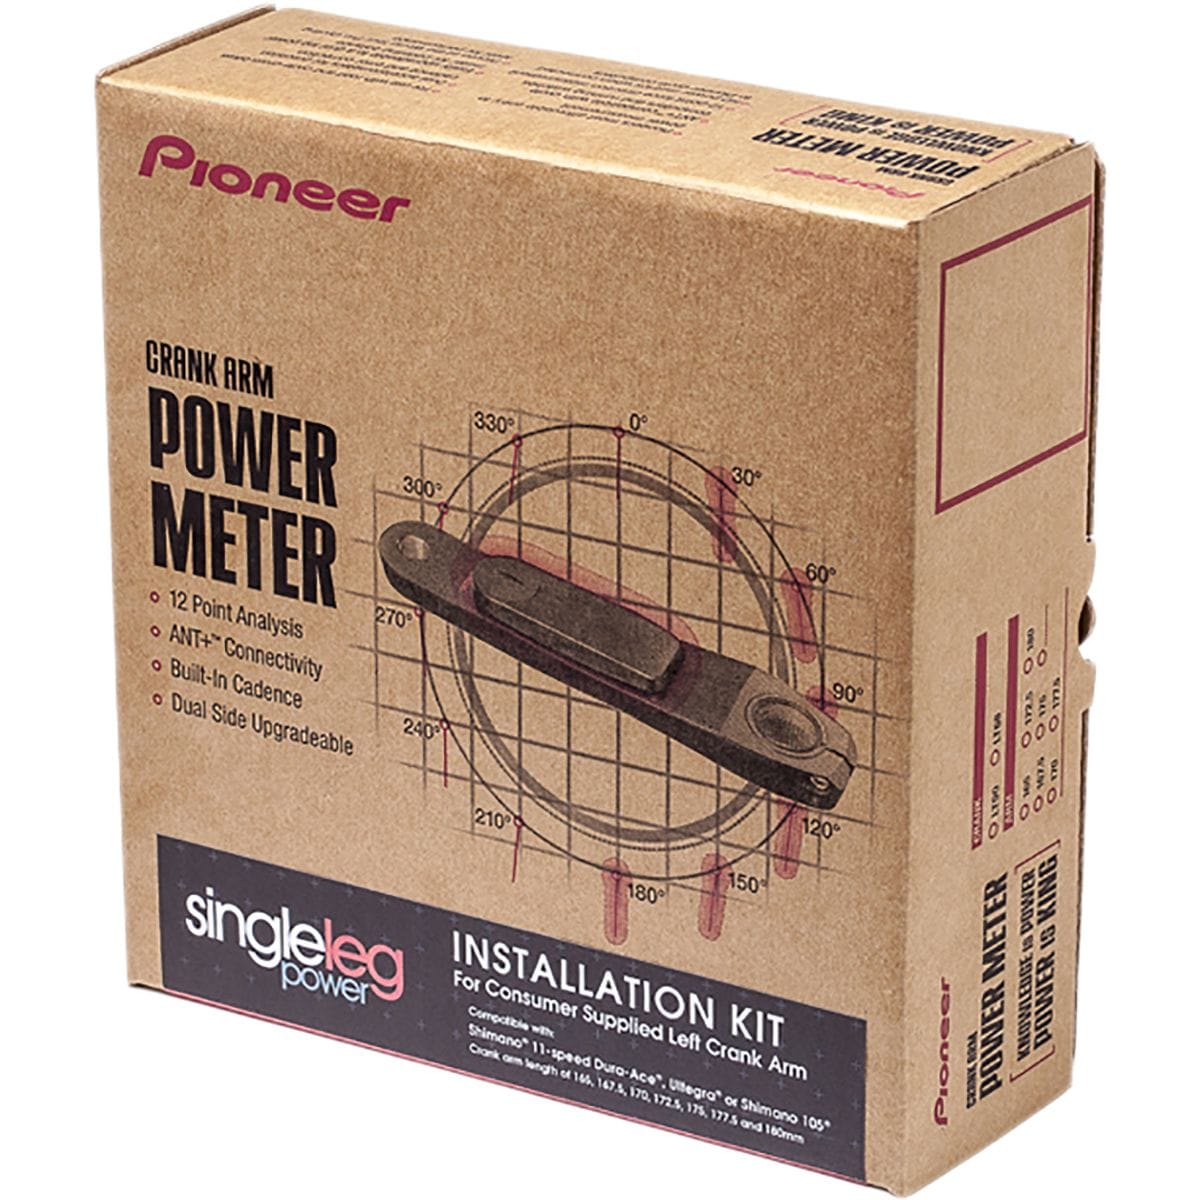 Pioneer Left Arm Power Meter Installation Kit for Consumer Supplied Cranks